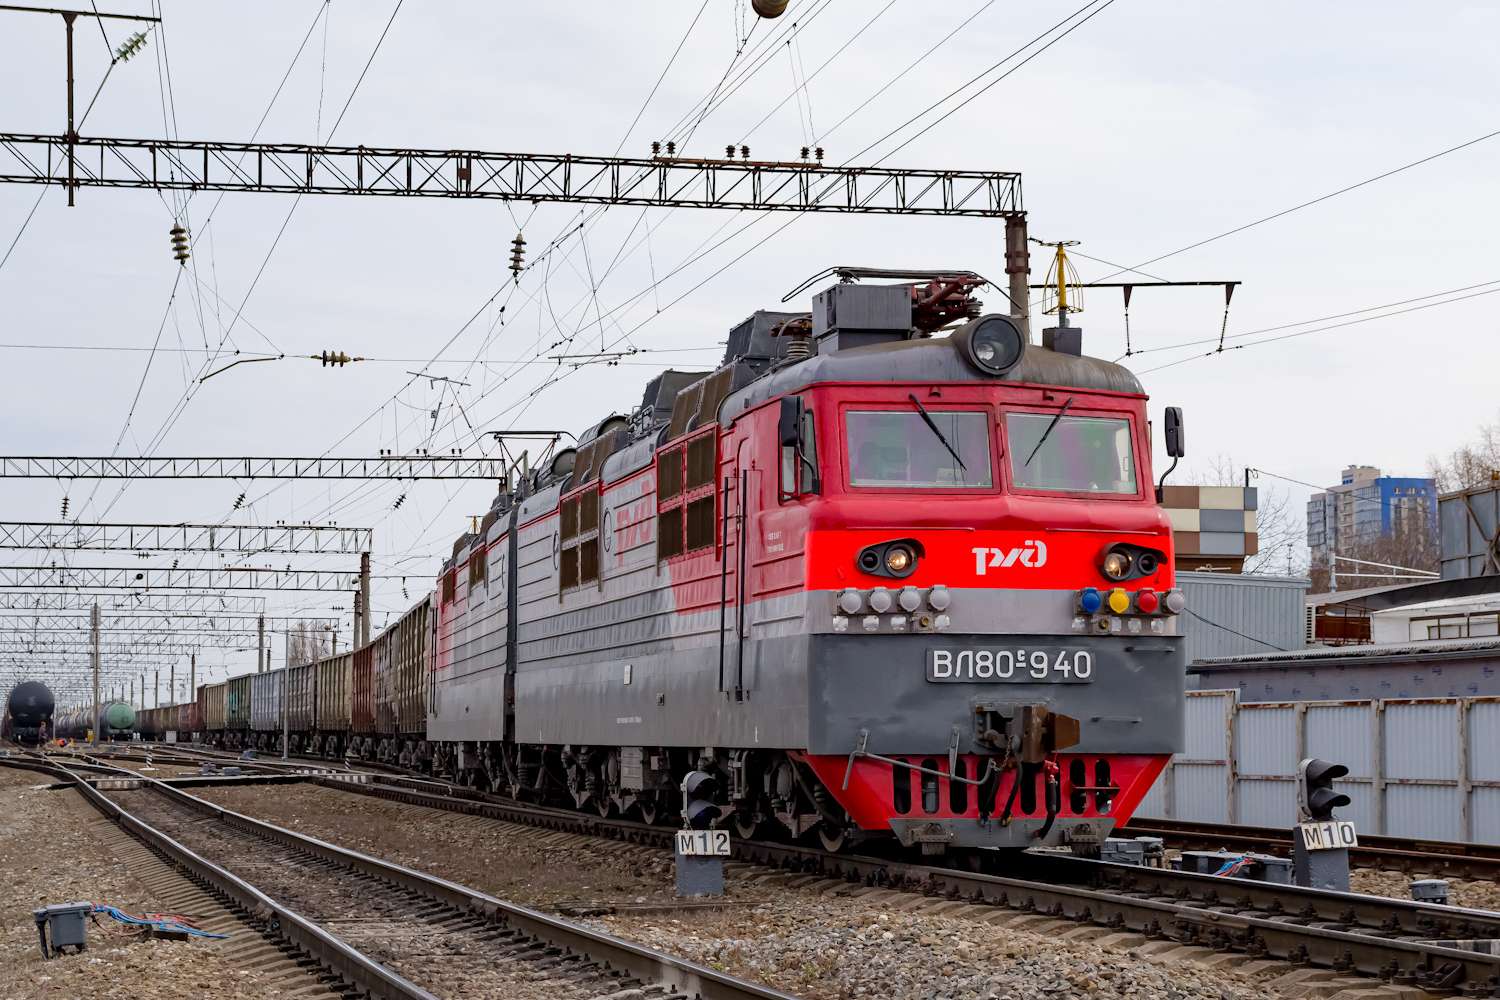 Orosz Vasutak vonatai puzzle online fotóról